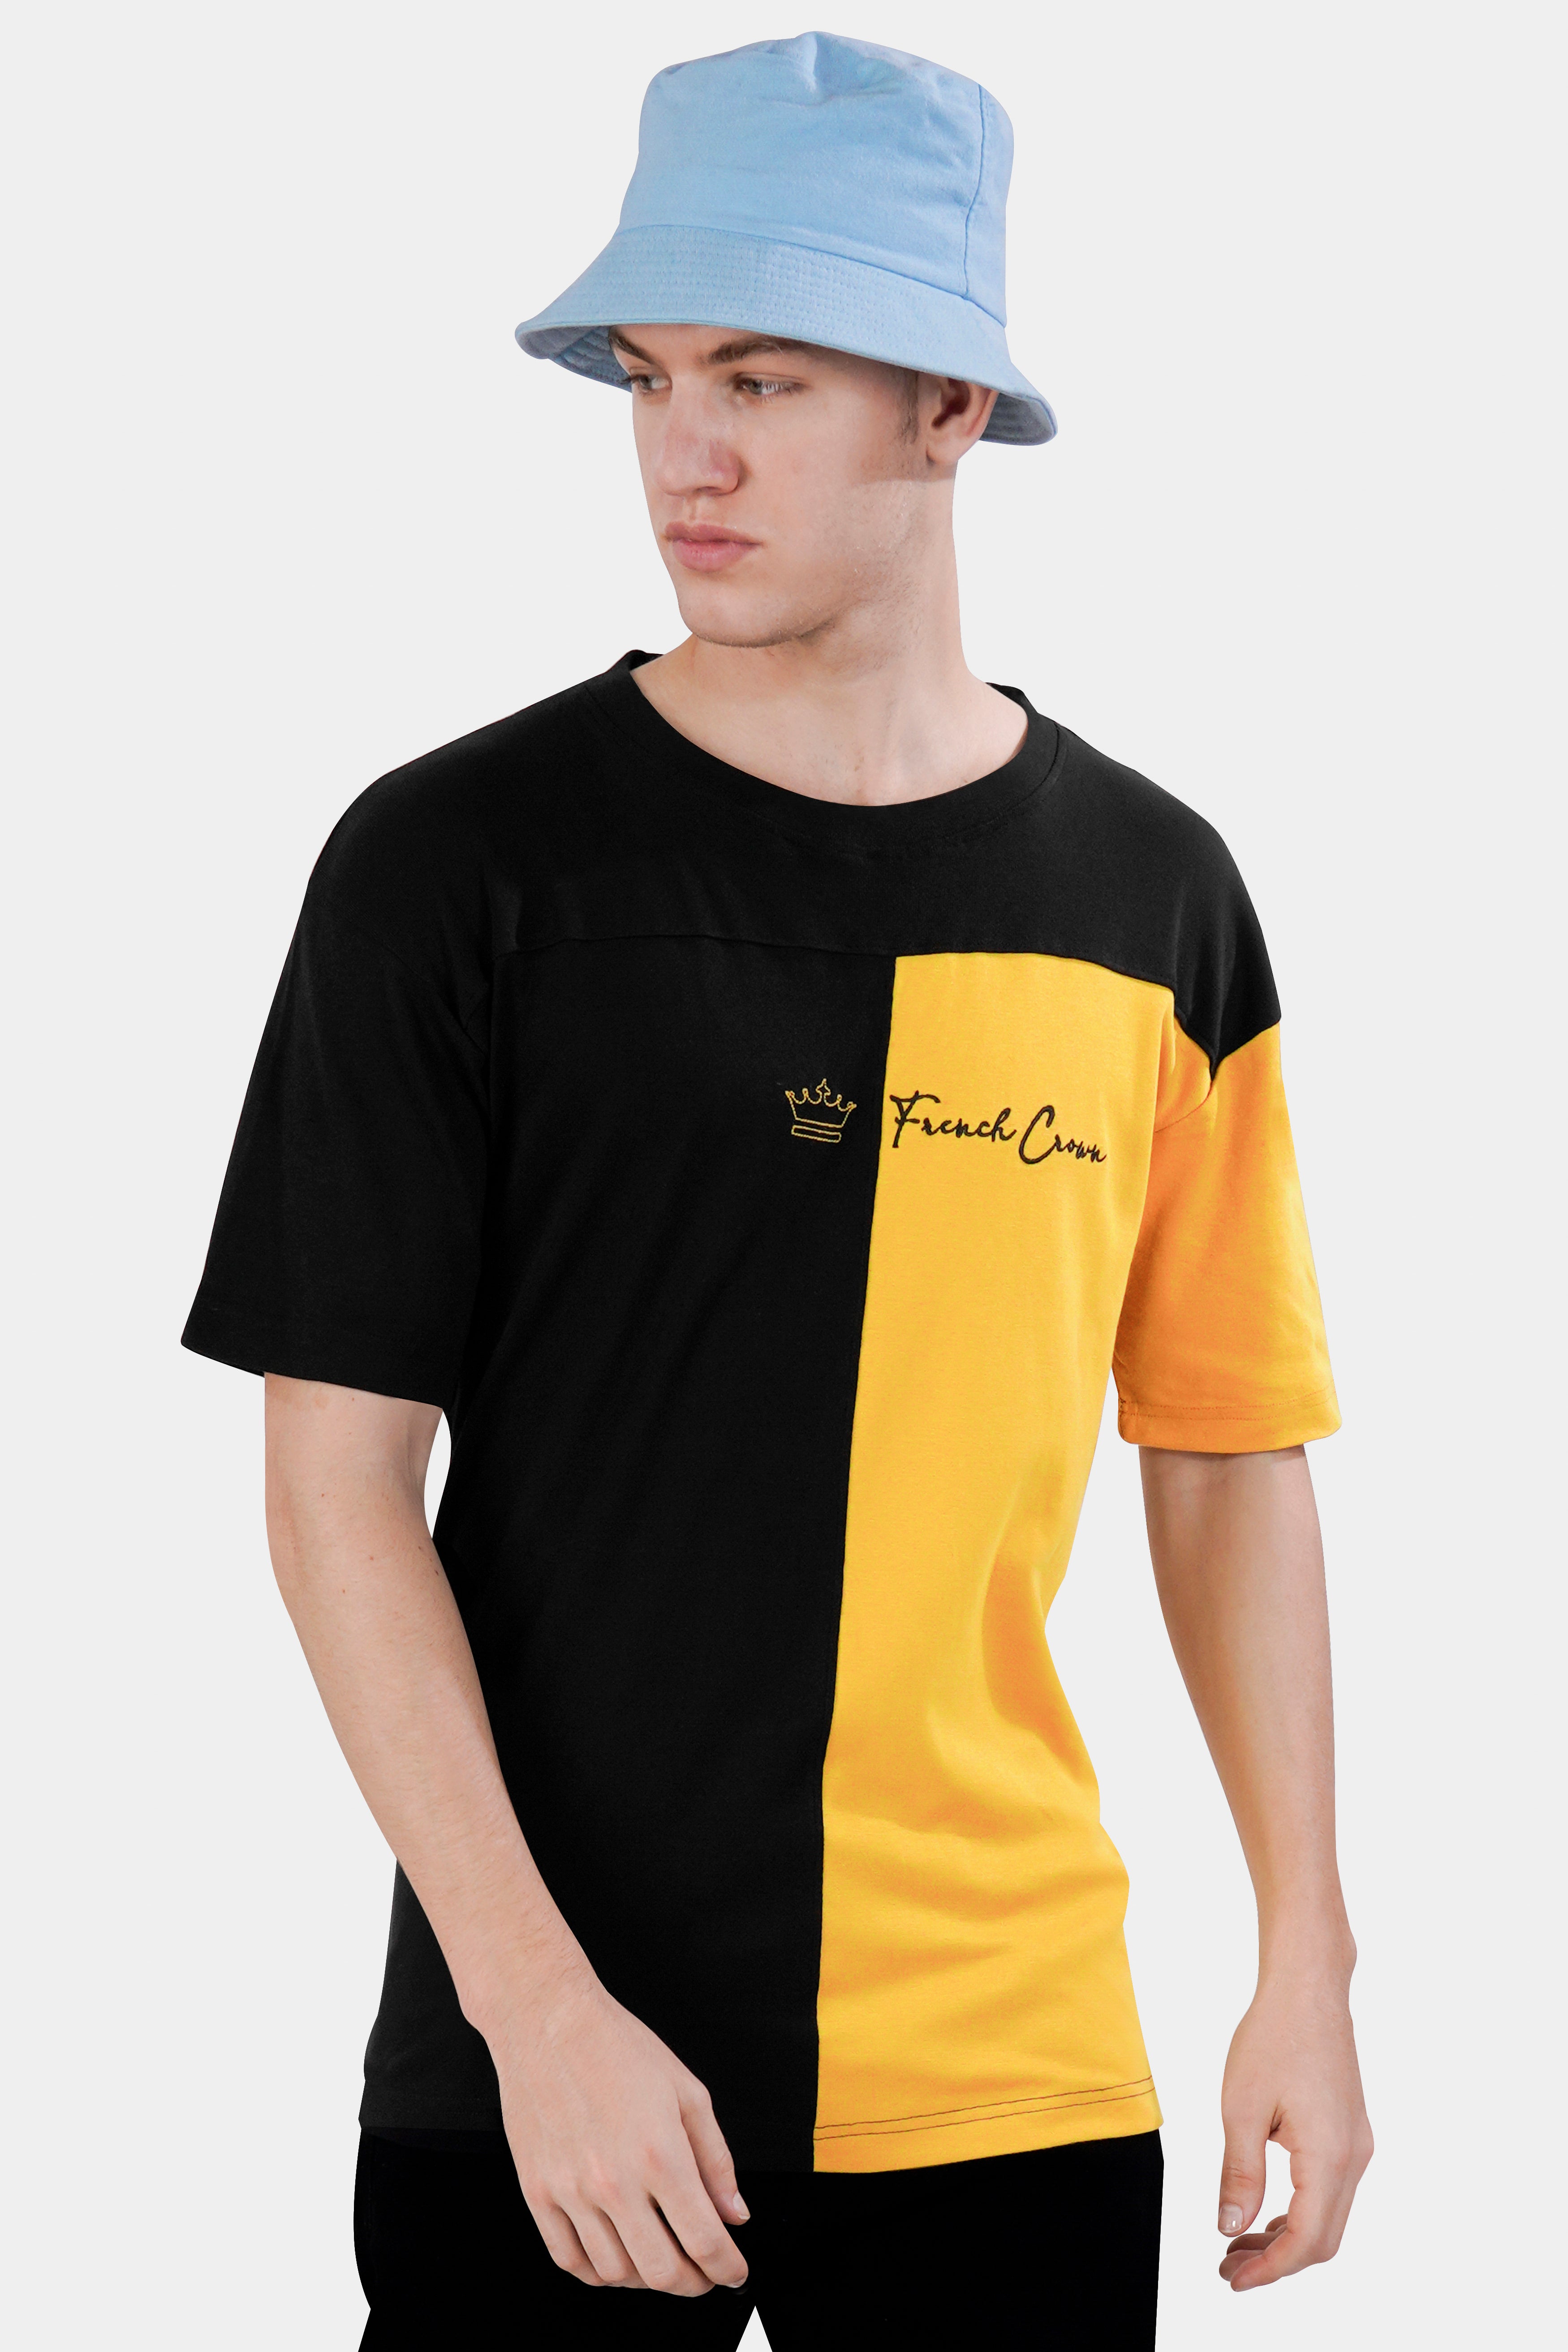 Jade Black and Amber Yellow Premium Cotton T-shirt TS946-S, TS946-M, TS946-L, TS946-XL, TS946-XXL